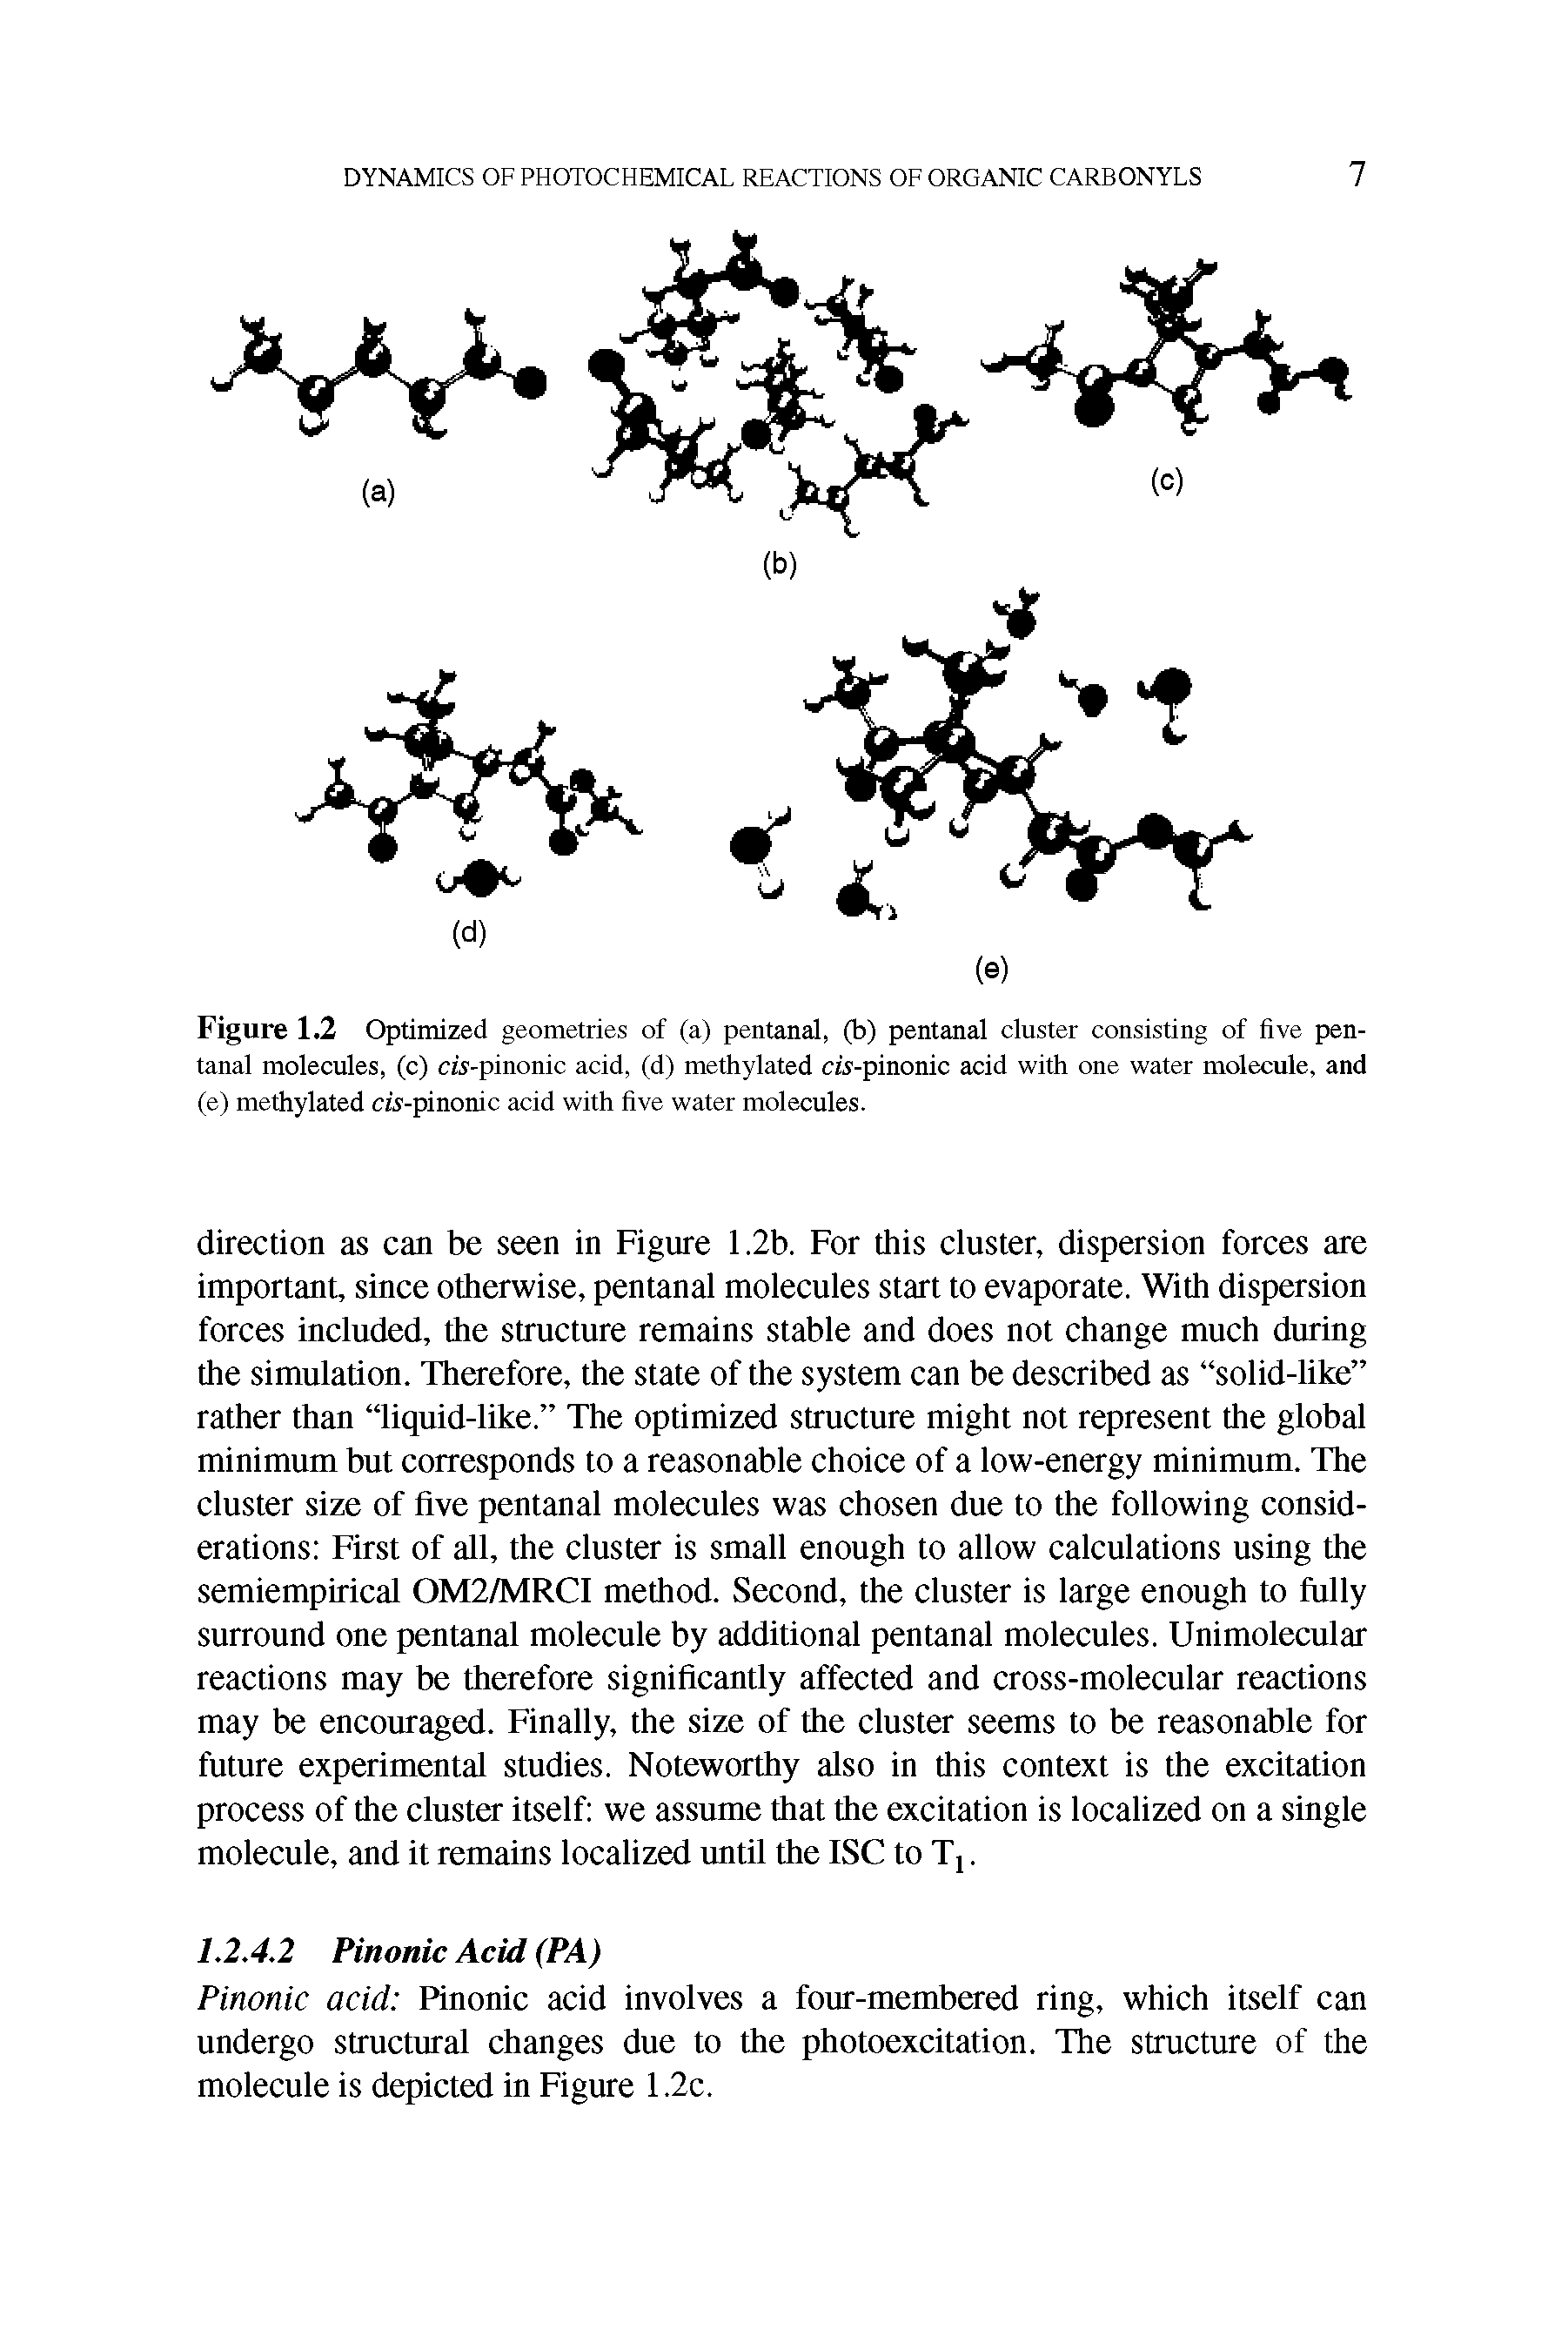 Figure 1.2 Optimized geometries of (a) pentanal, (b) pentanal cluster consisting of five pen-tanal molecules, (c) cis-pinonic acid, (d) methylated cis-pinonic acid with one water molecule, and (e) methylated cis-pinonic acid with five water molecules.